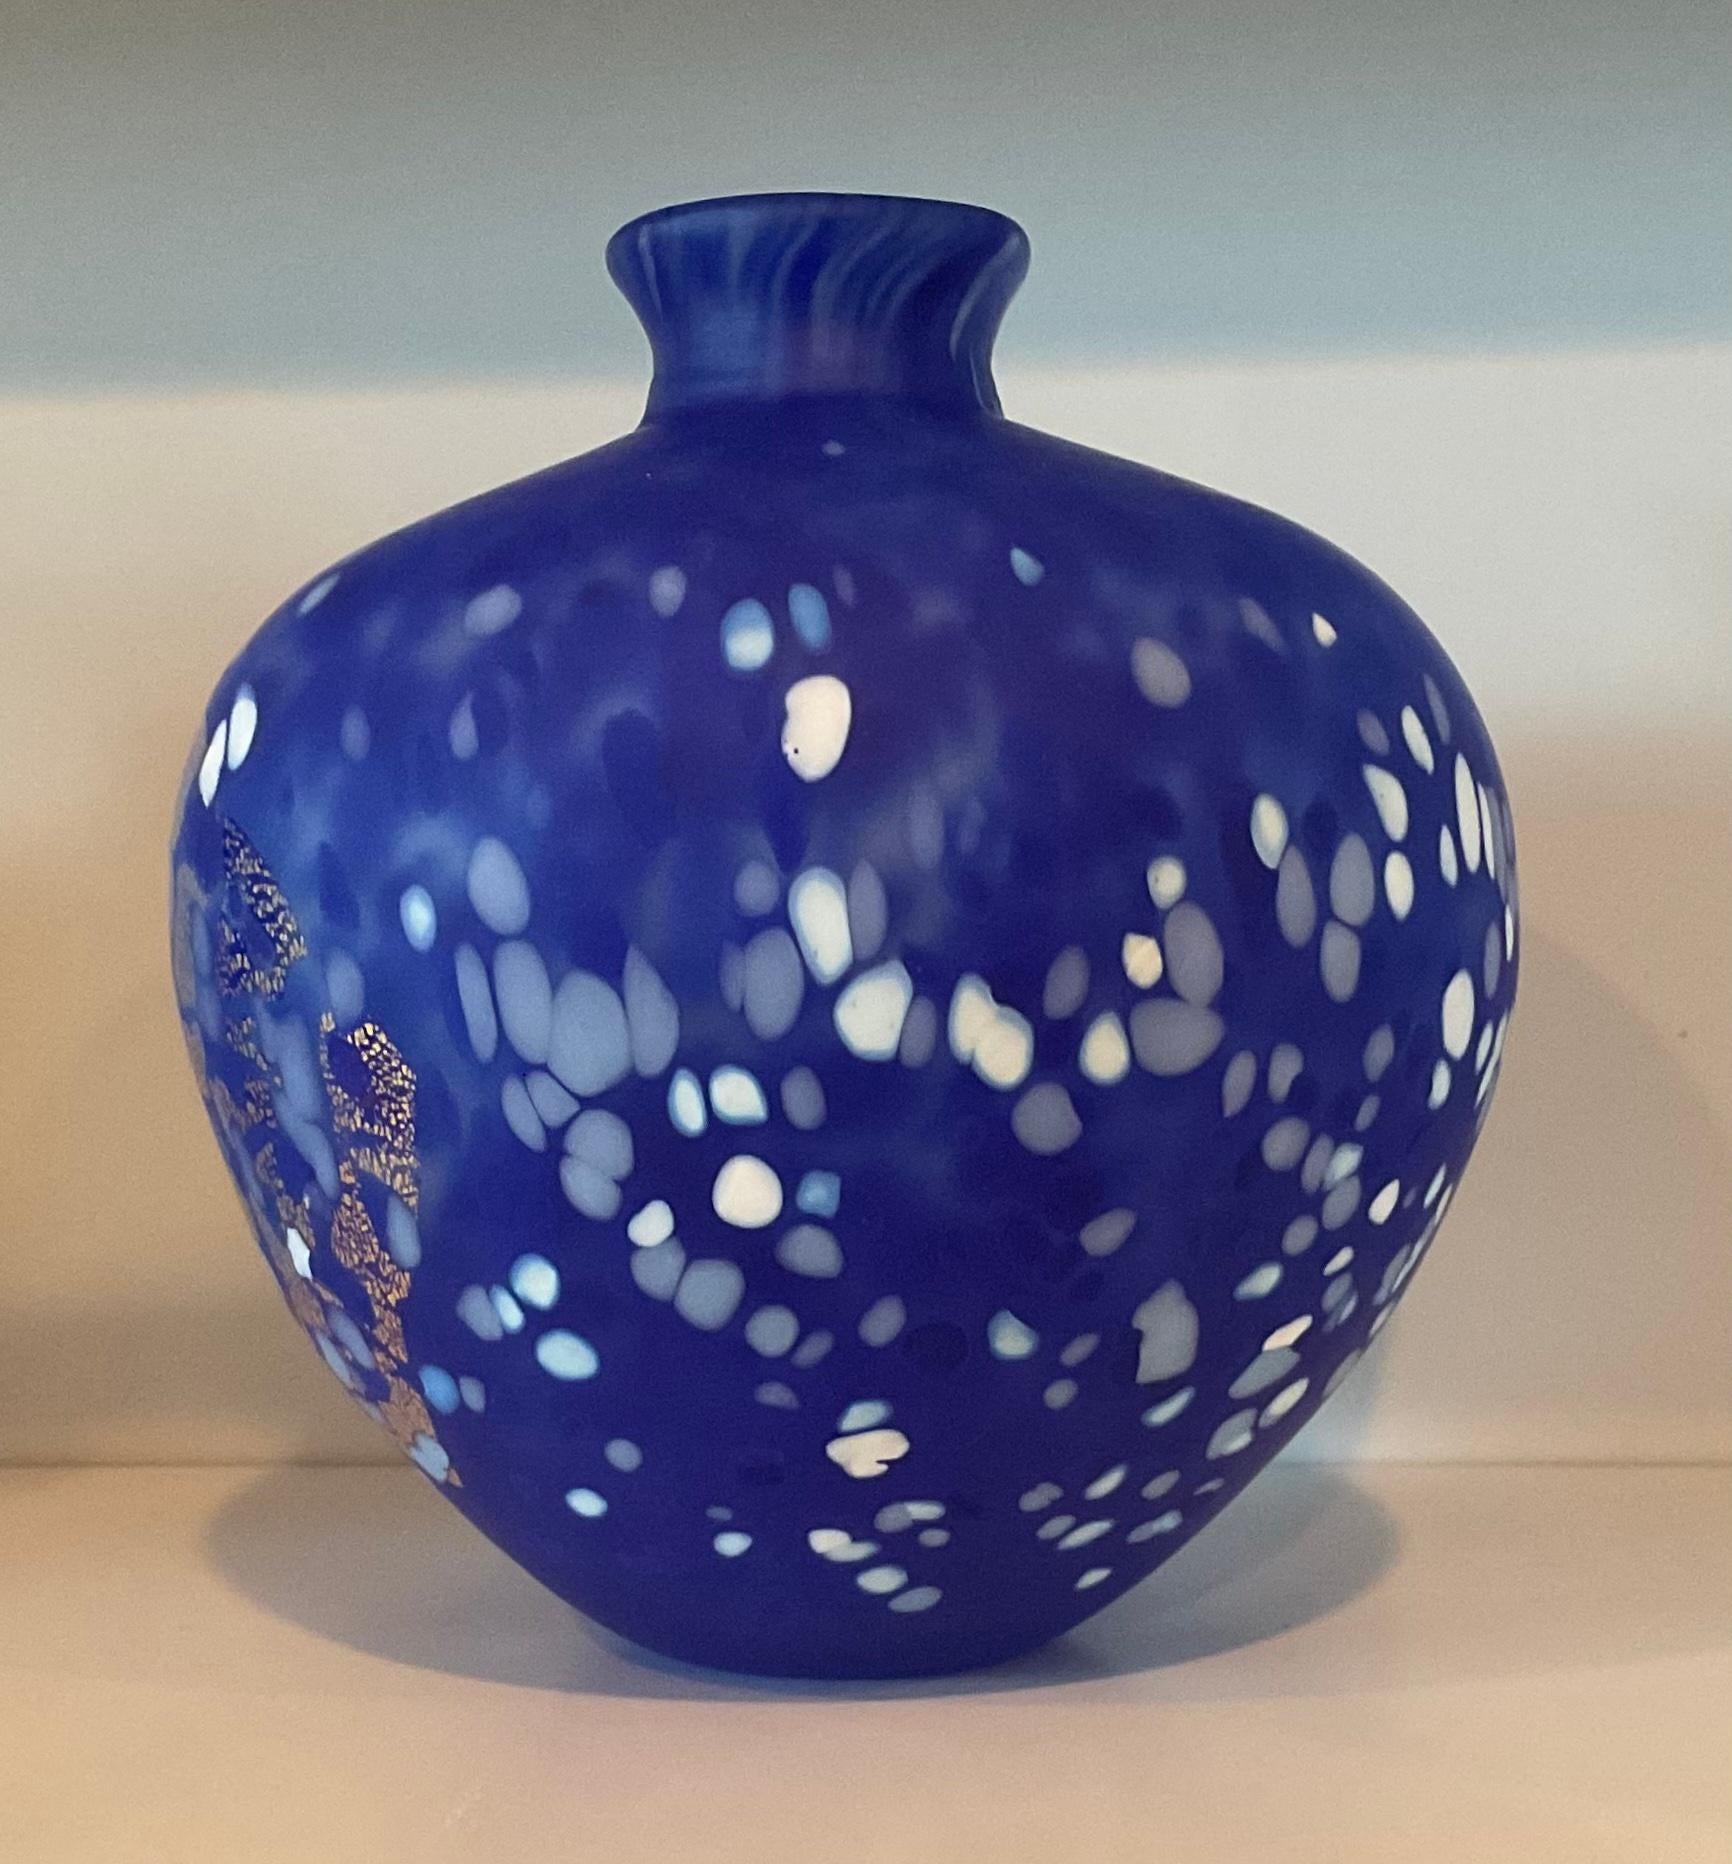 Late 20th Century Kyohei Fujita Japanese Studio Glass Vase Signed by the Artist Vibrant Blue